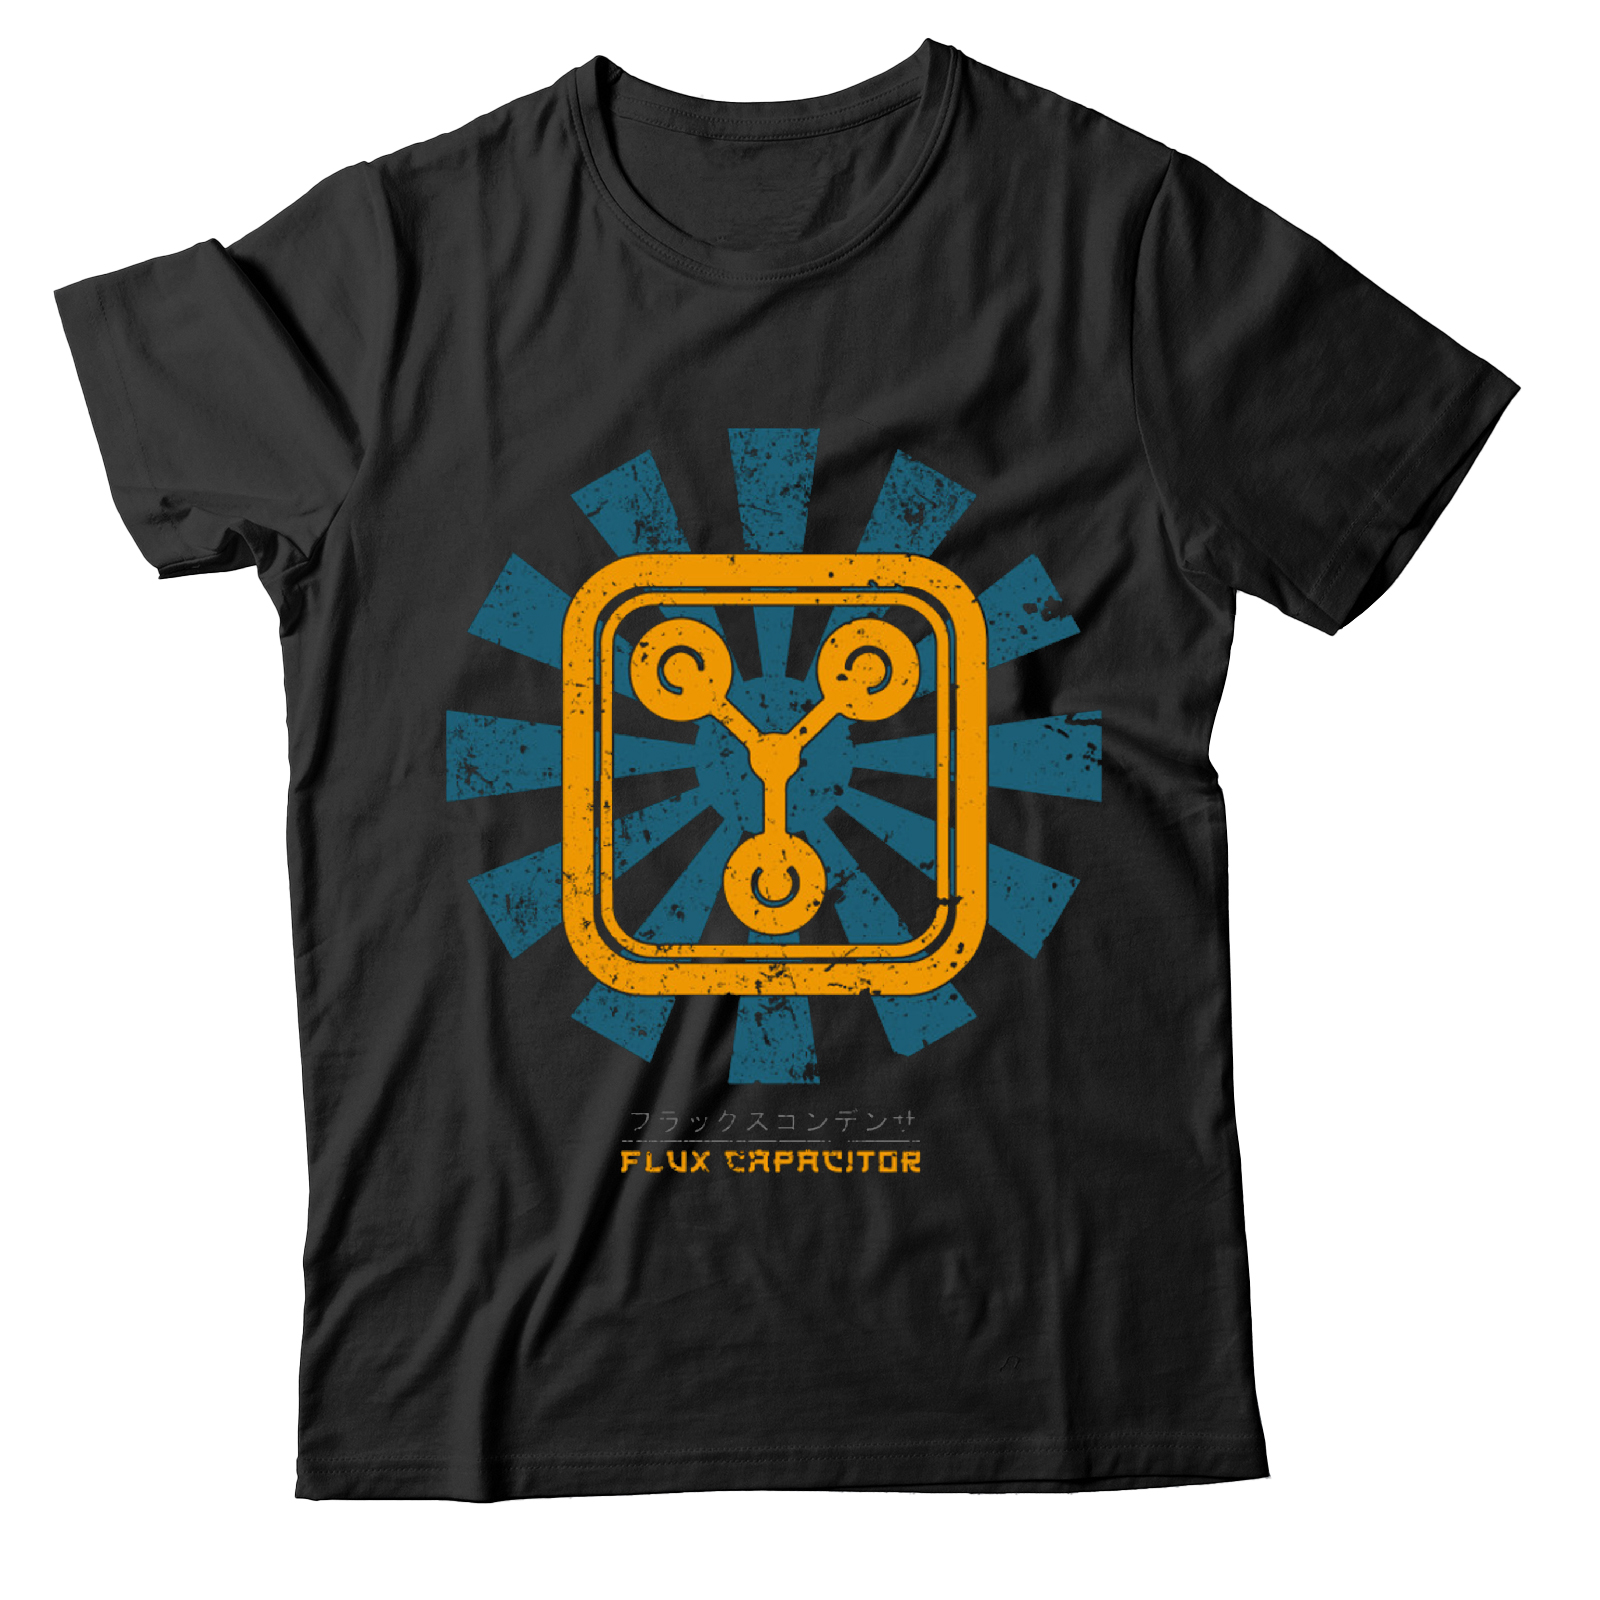 Retro Mens Tee Top Unisex T shirts #P1 #PR #M | eBay